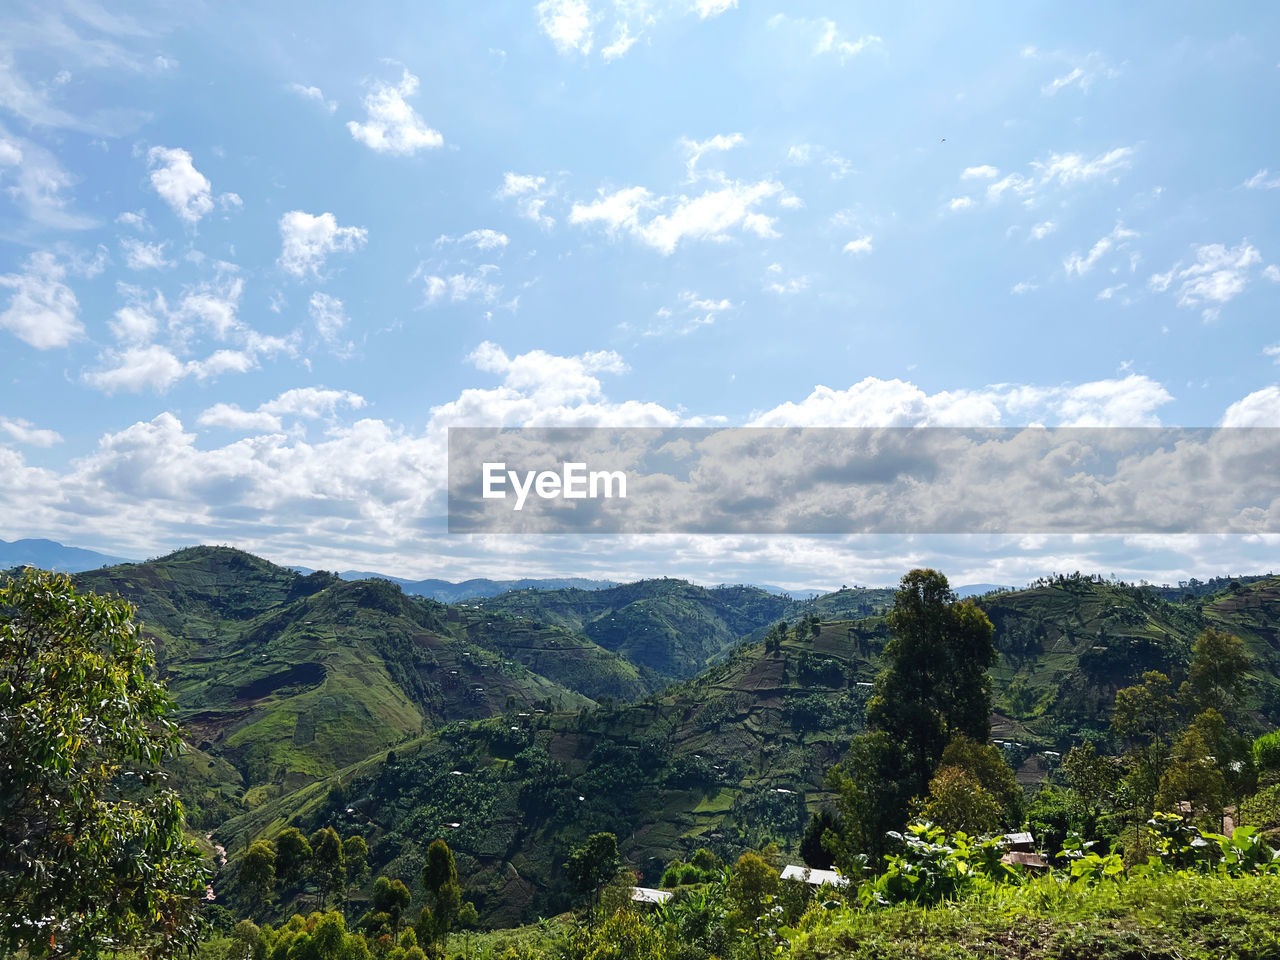 Burundi hills